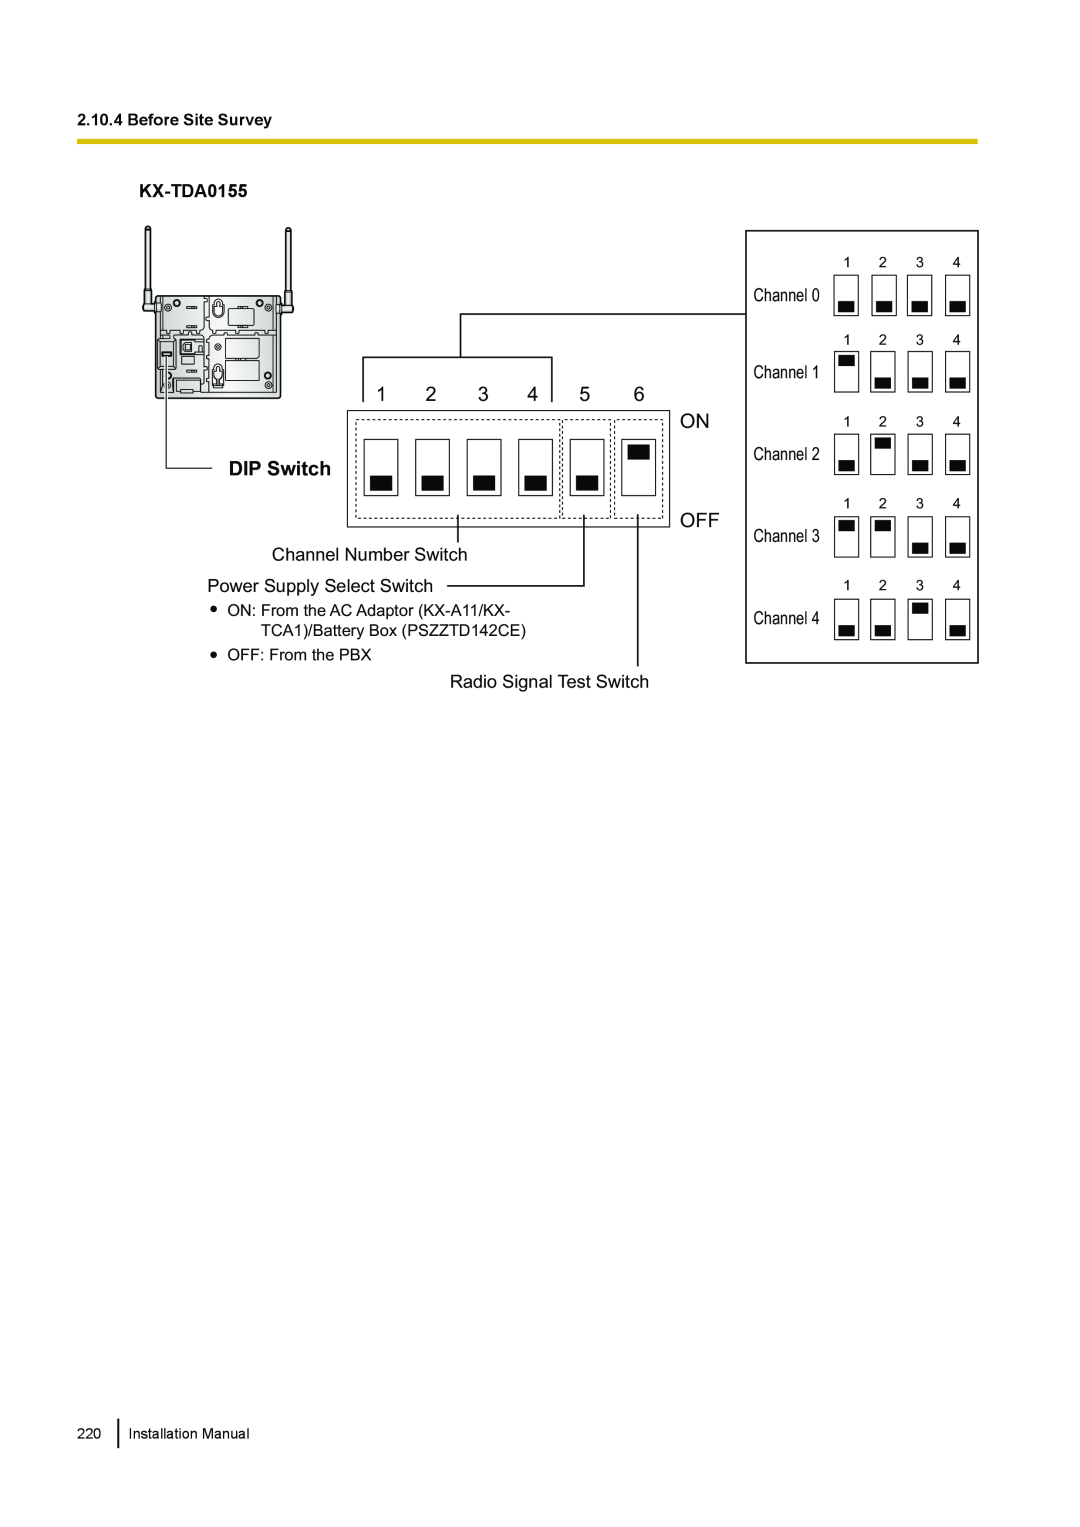 Panasonic KX-TDA100 installation manual DIP Switch, KX-TDA0155, Before Site Survey 